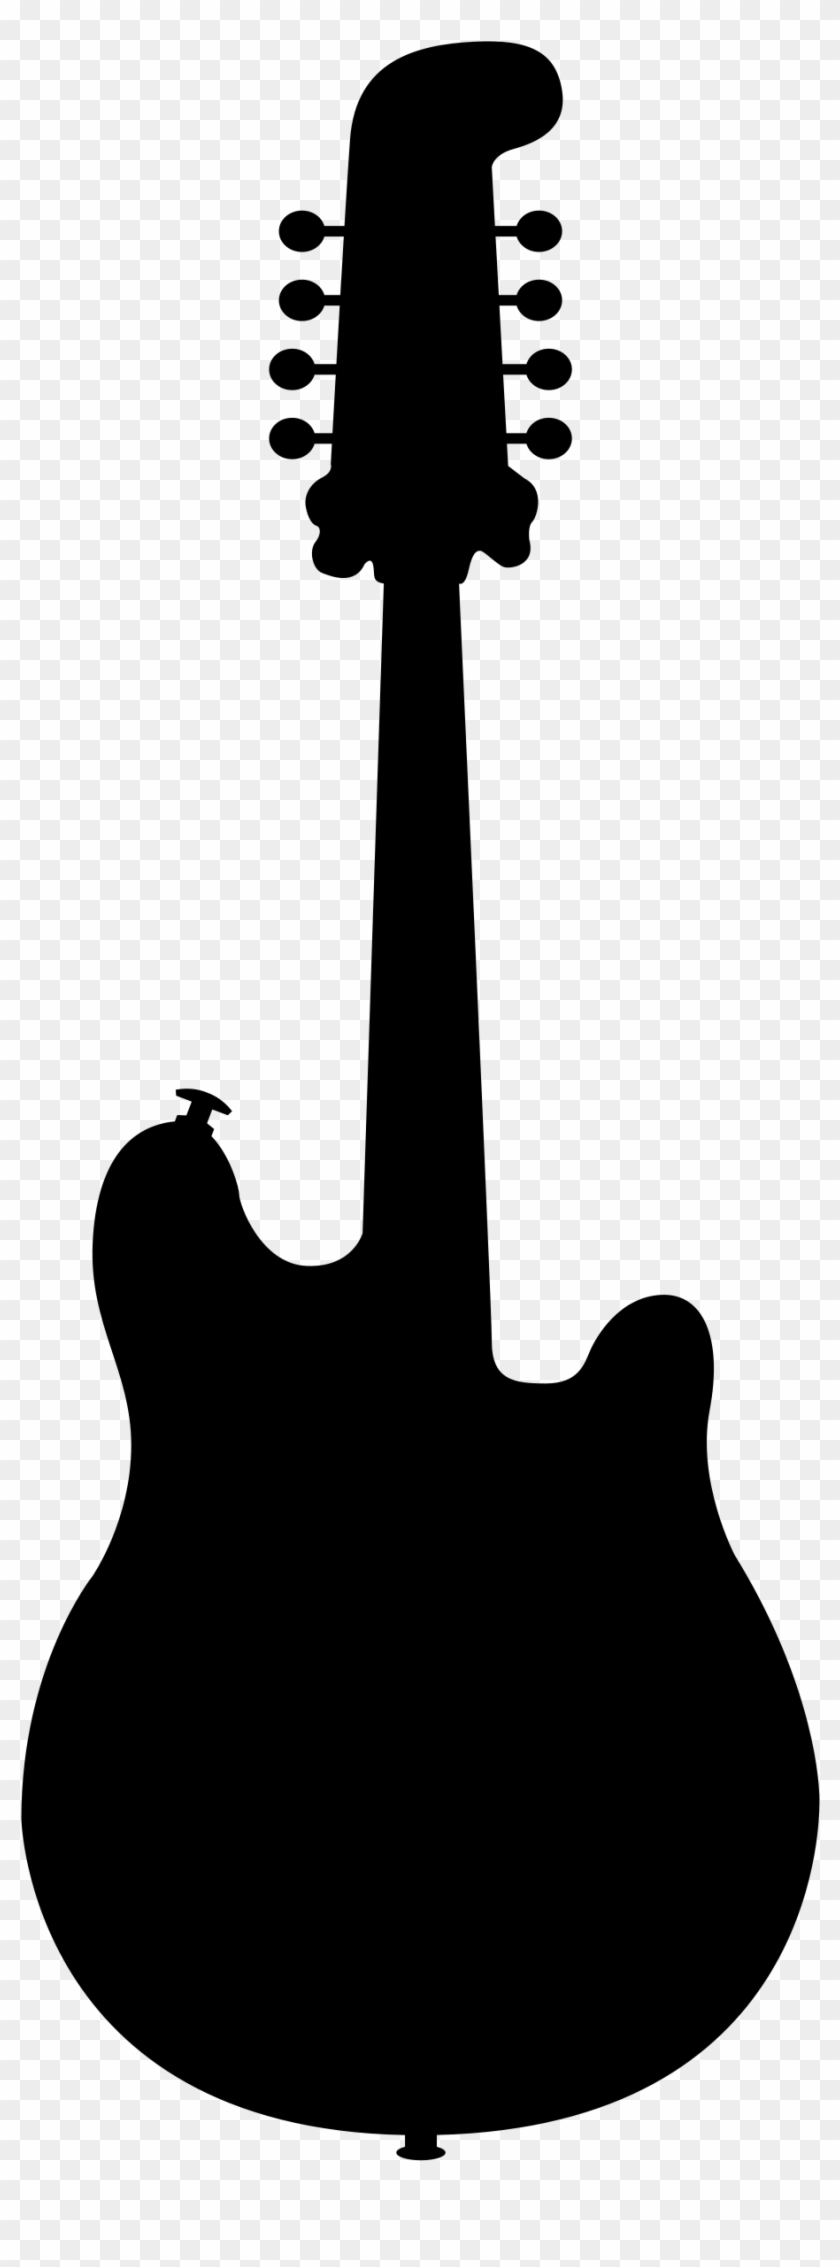 Minimalist Guitar Silhouette Clip Art Medium Size - Electric Guitar #183255